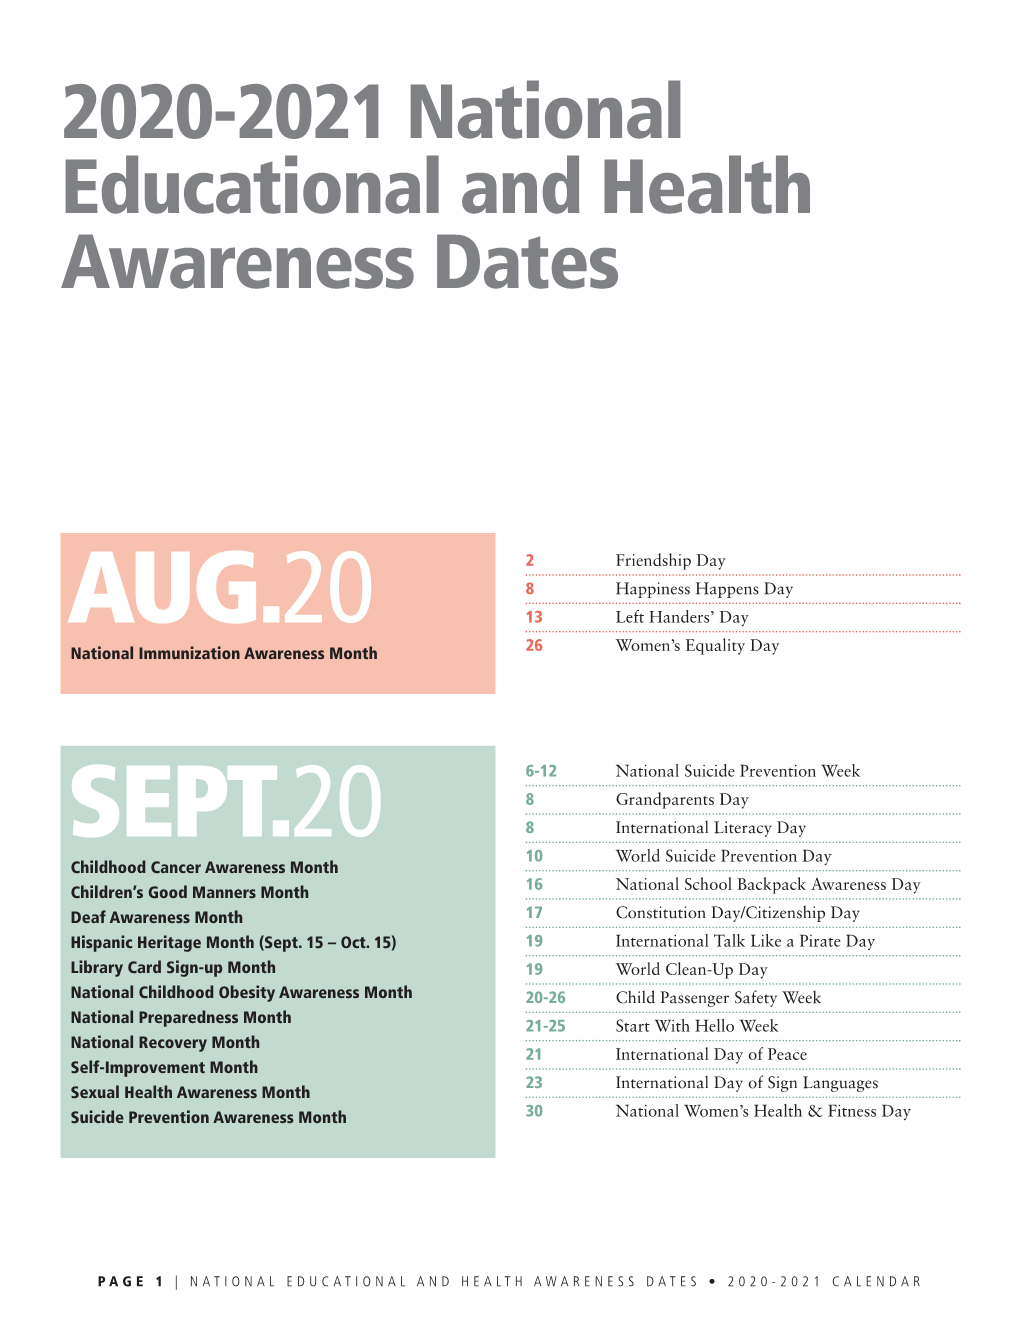 2020-2021 National Educational and Health Awareness Dates